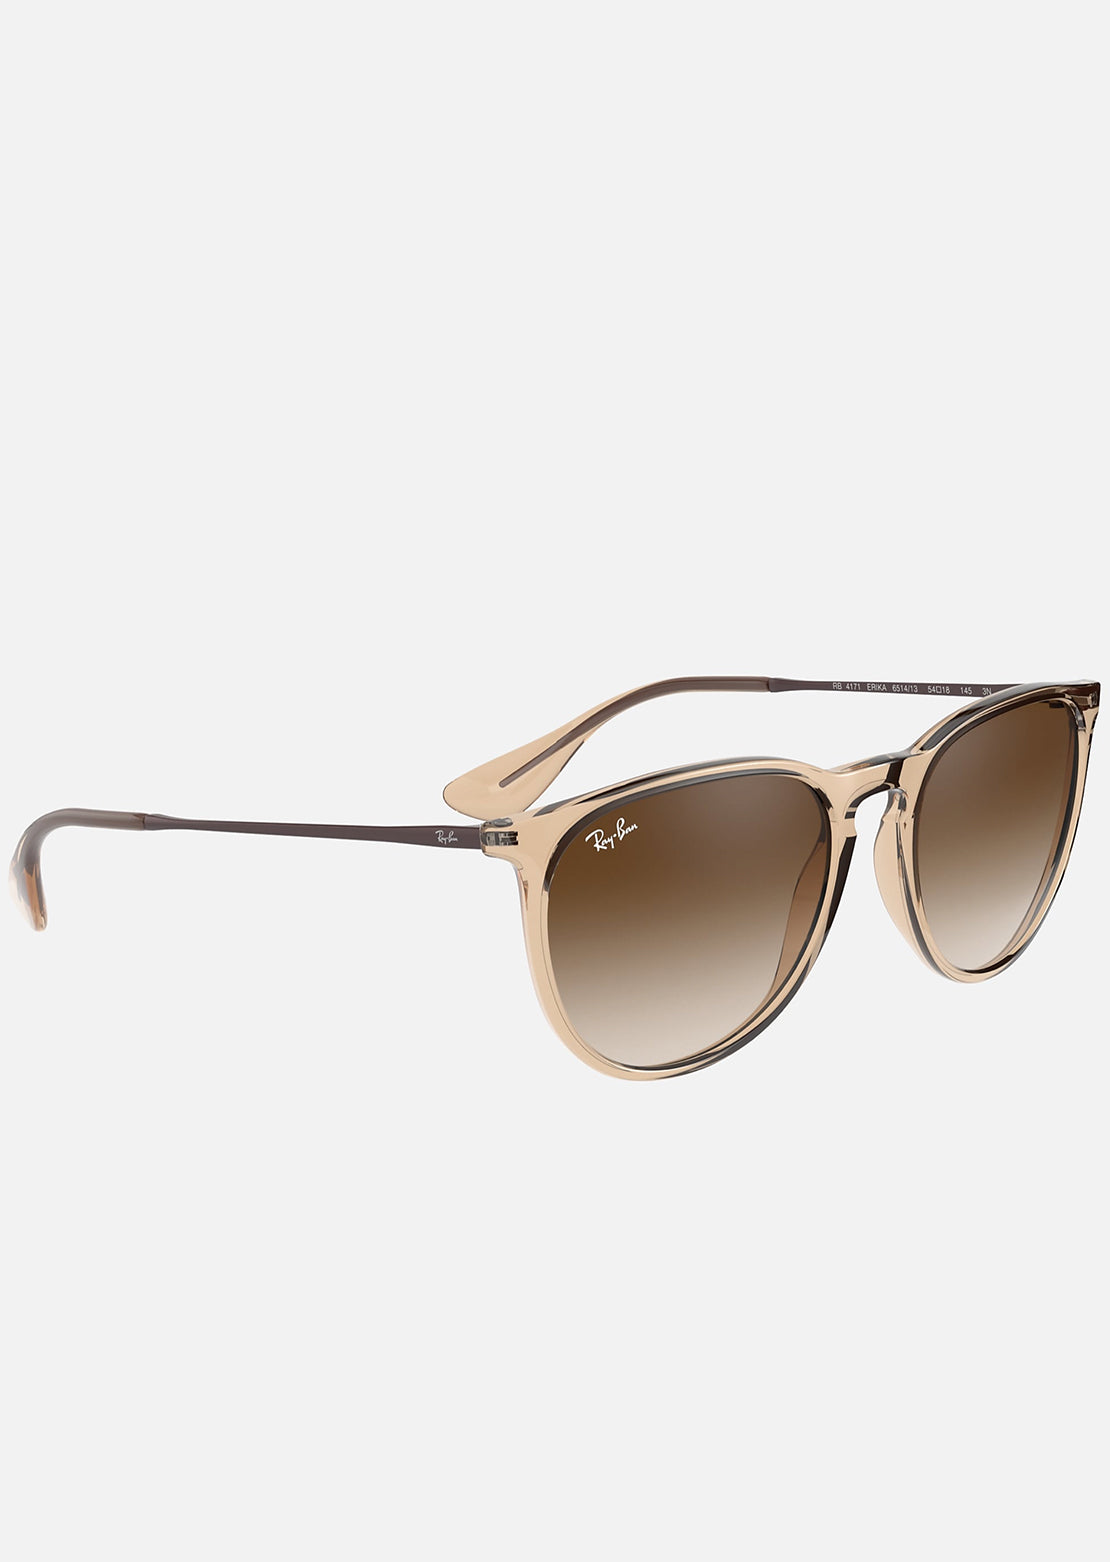 Ray-Ban Erika RB4171 Sunglasses Nylon Transparent Brown/Brown Gradient